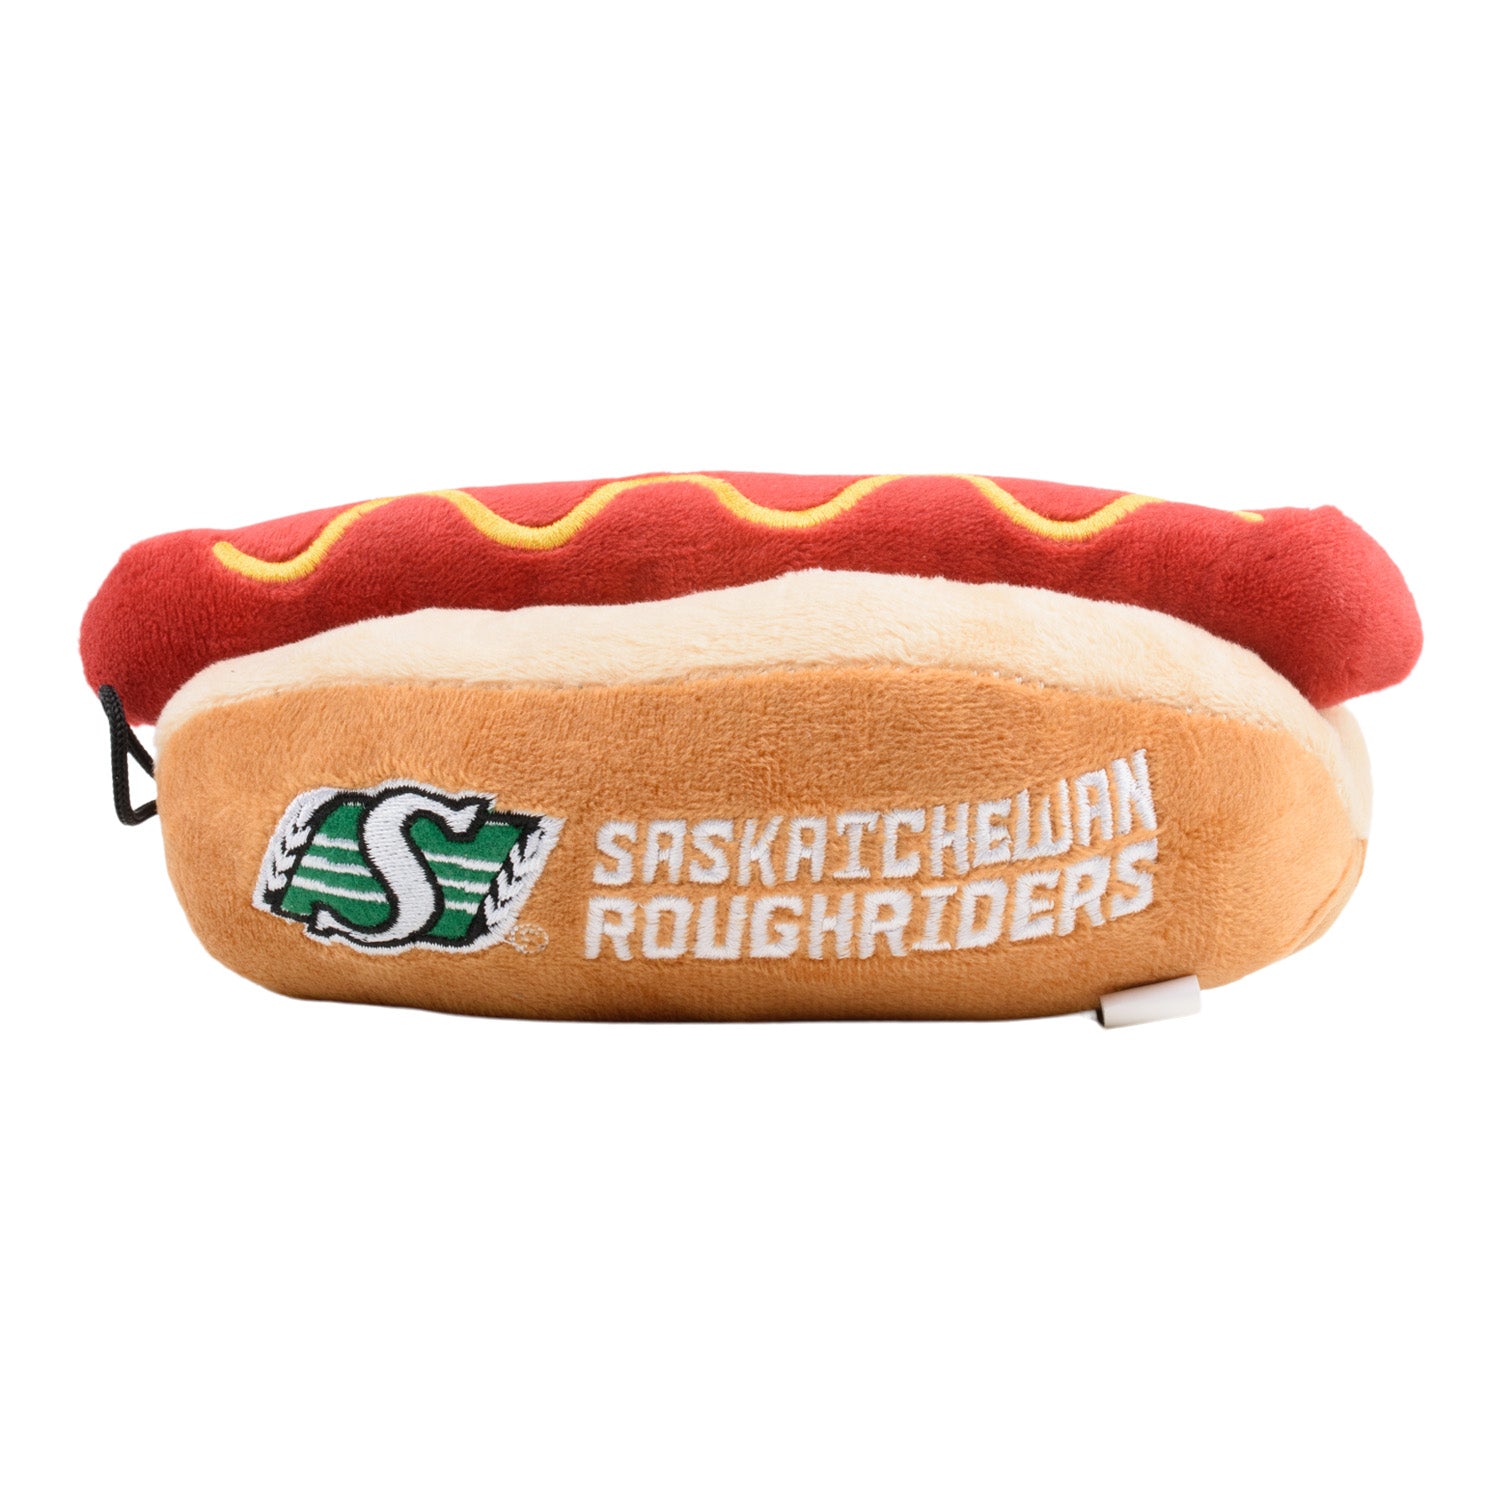 Stadium Hotdog Snax Toy